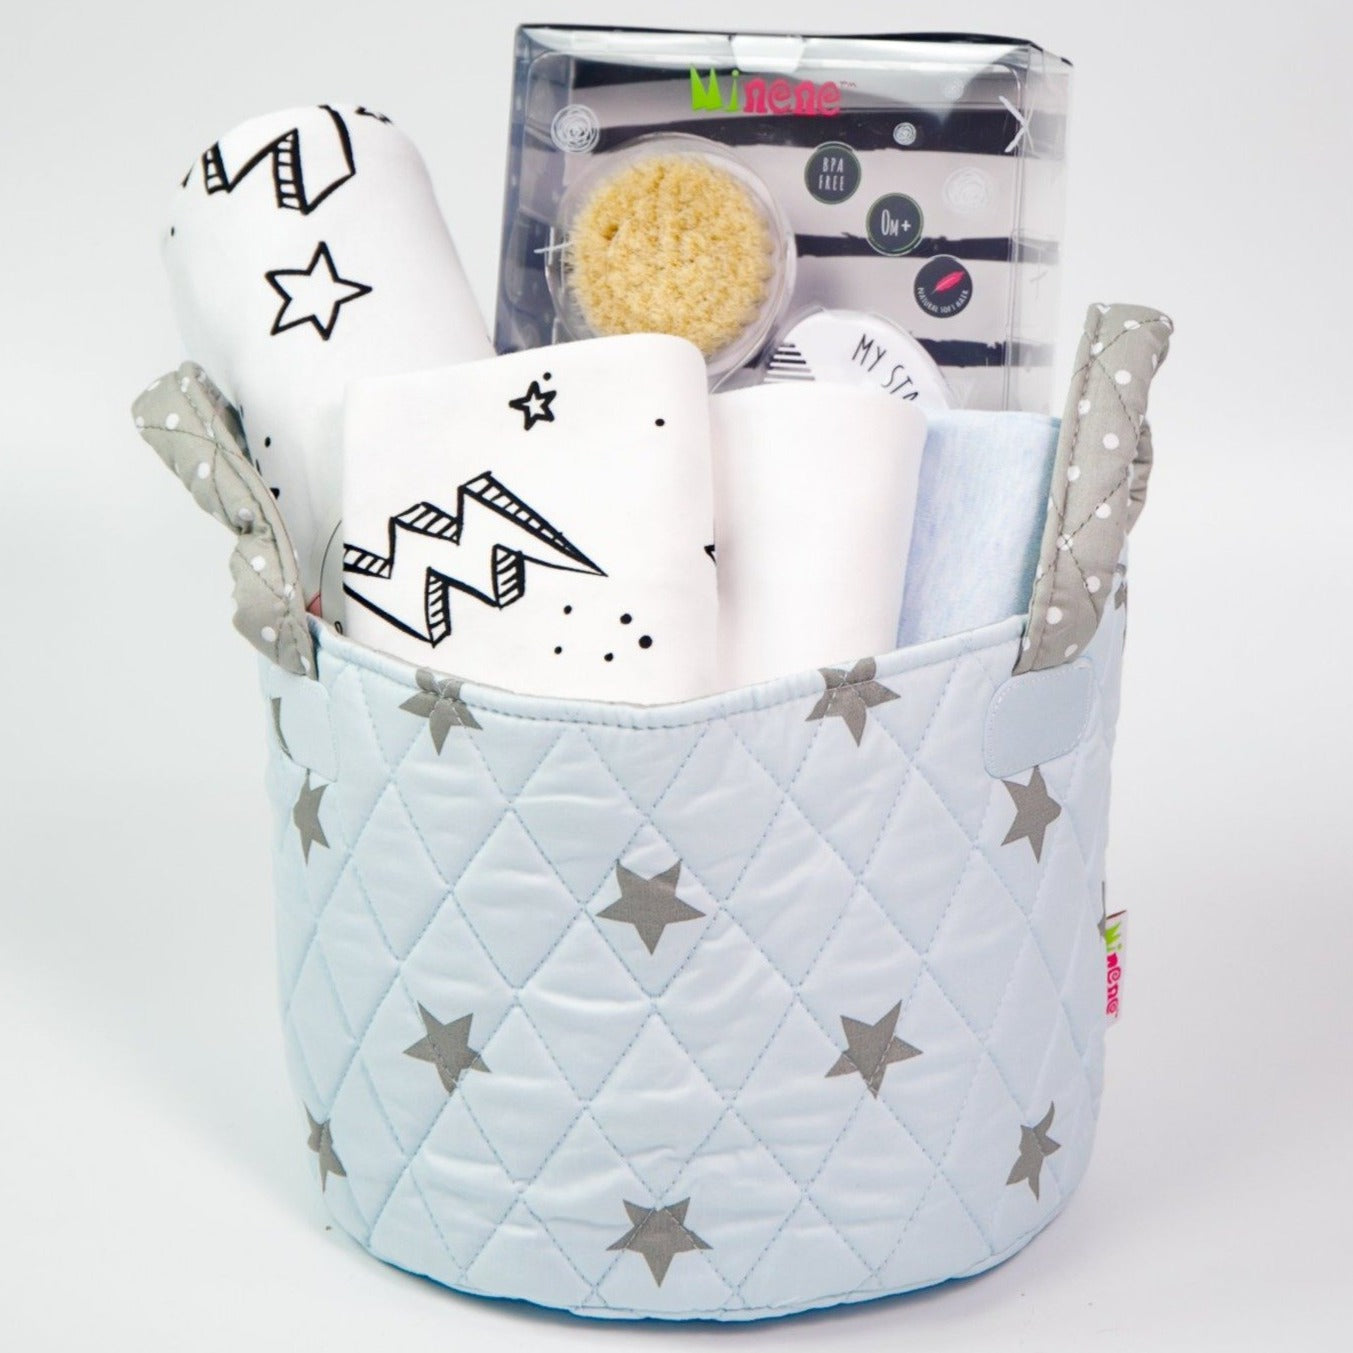 Mini Newborn Gift Basket for The Little One